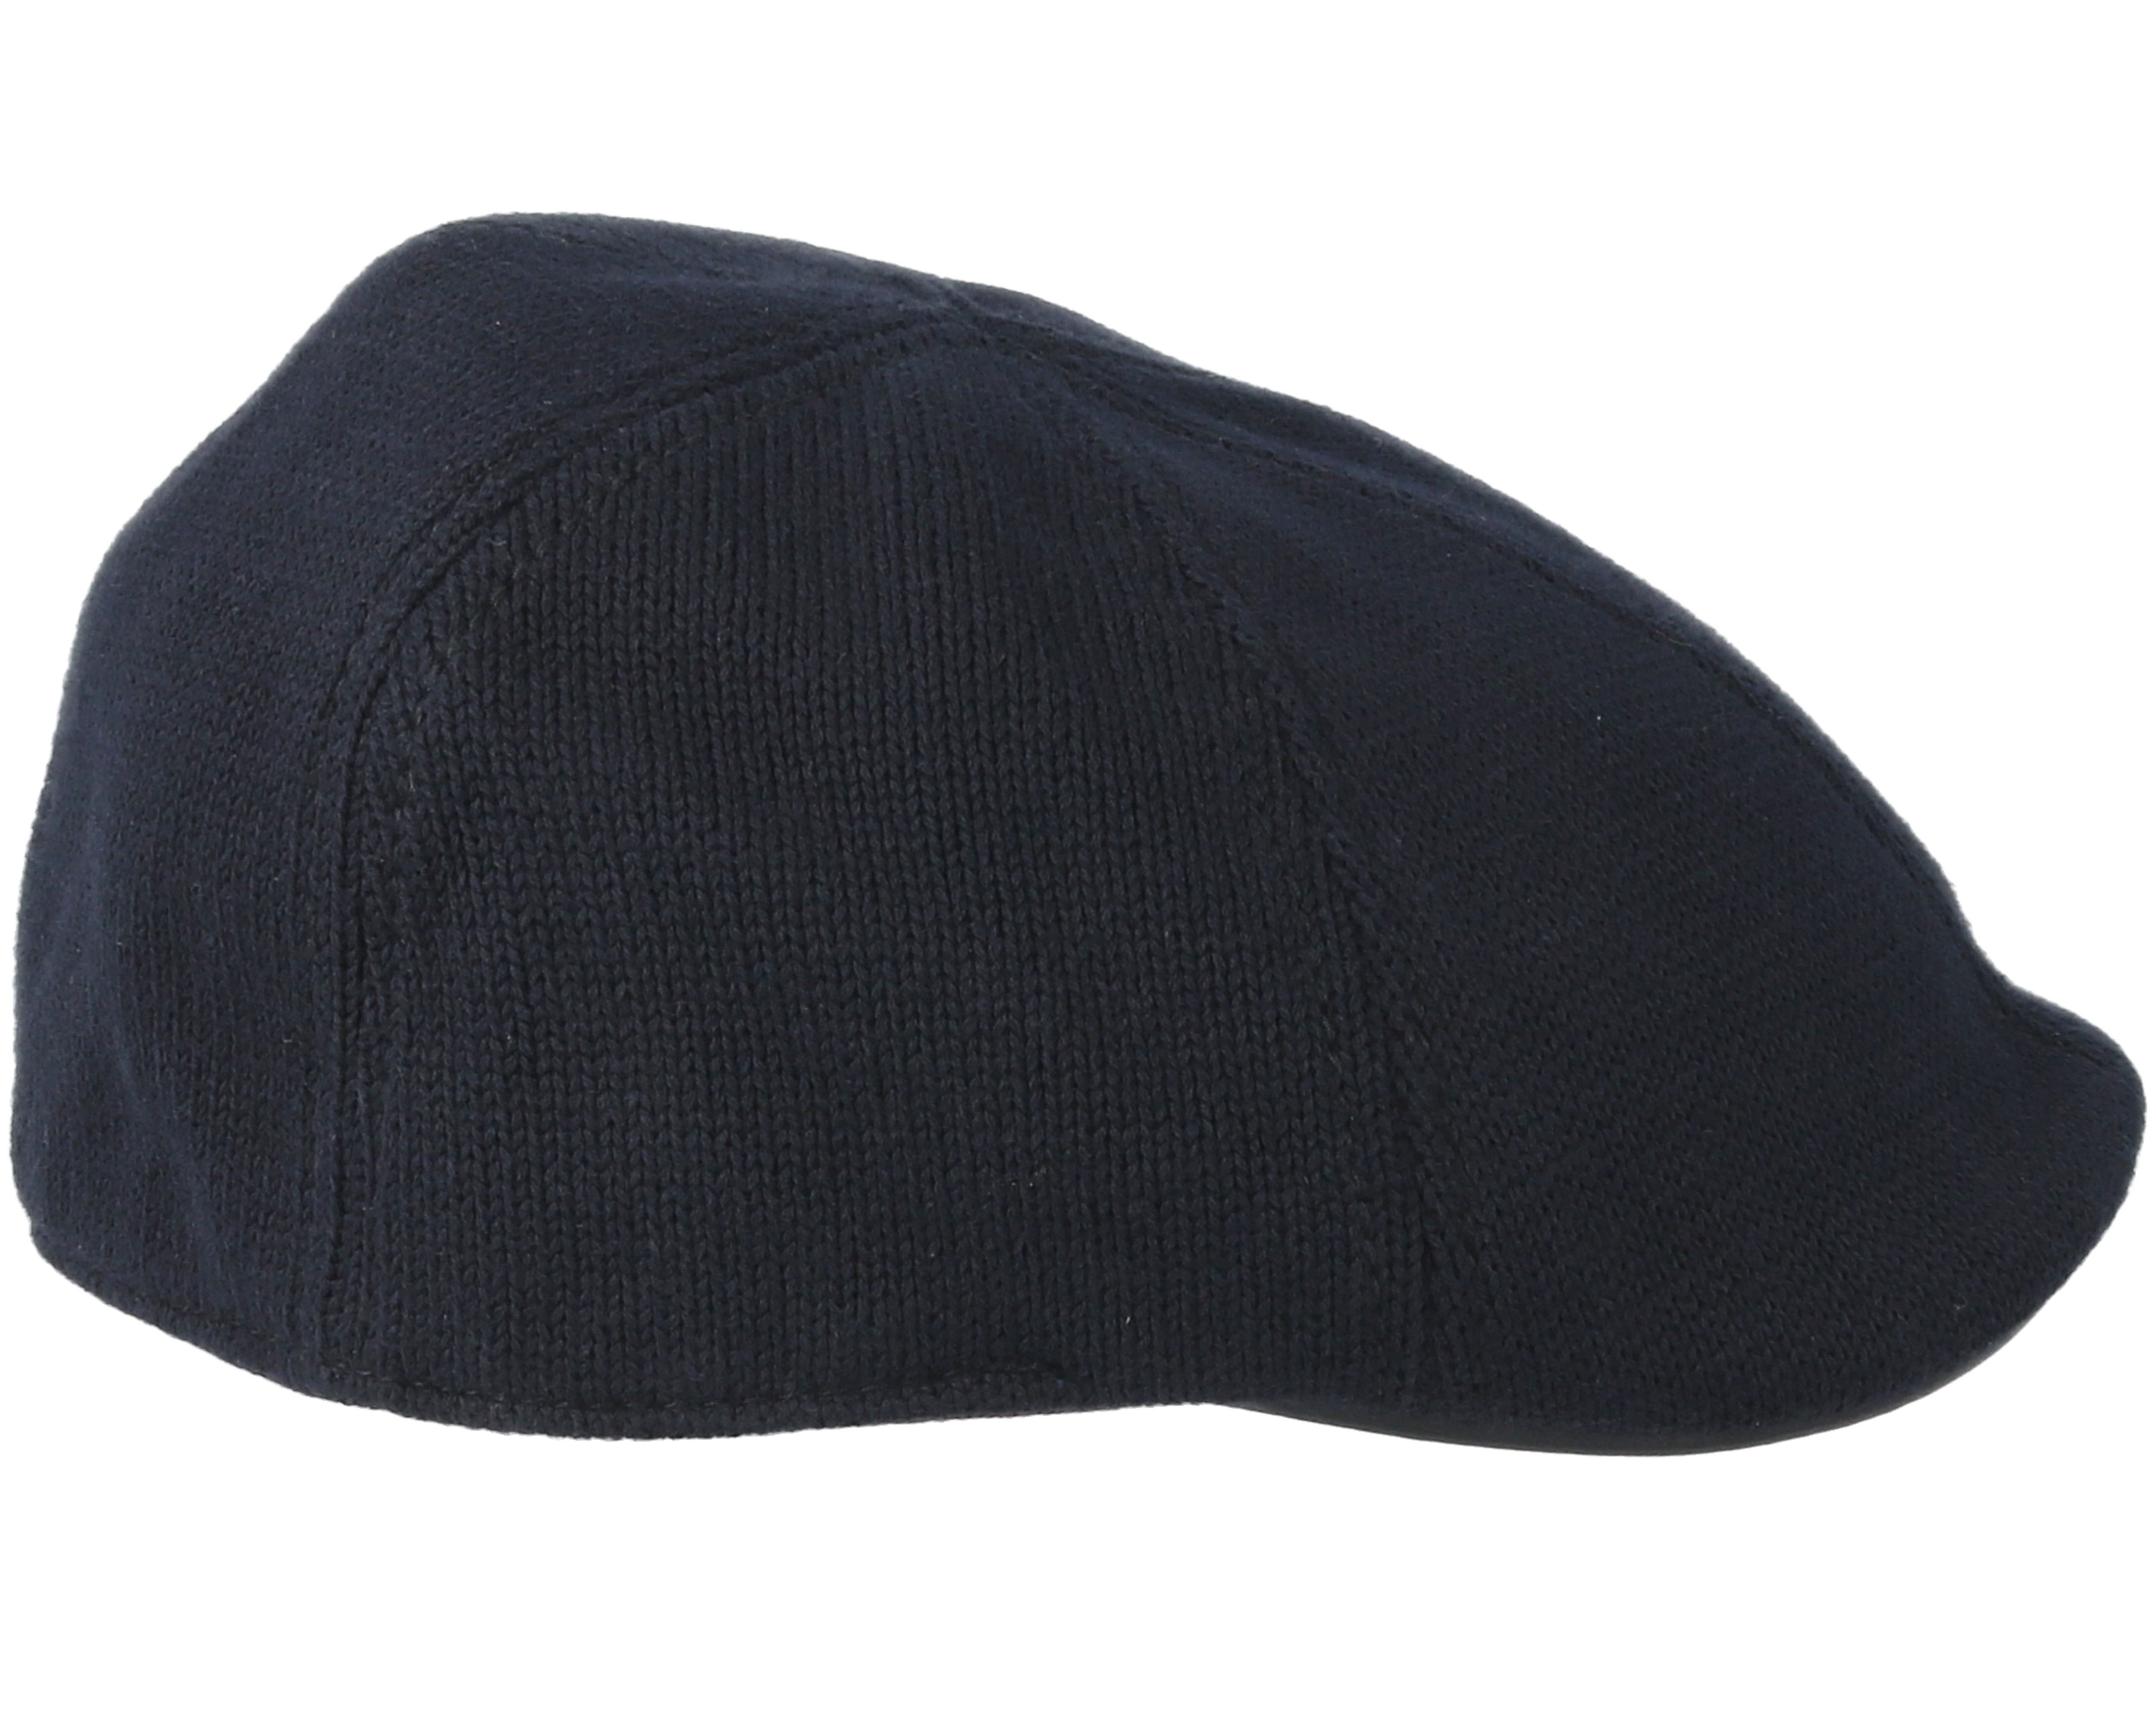 Texas Cotton Knit Black Flat Cap - Stetson caps - Hatstoreworld.com